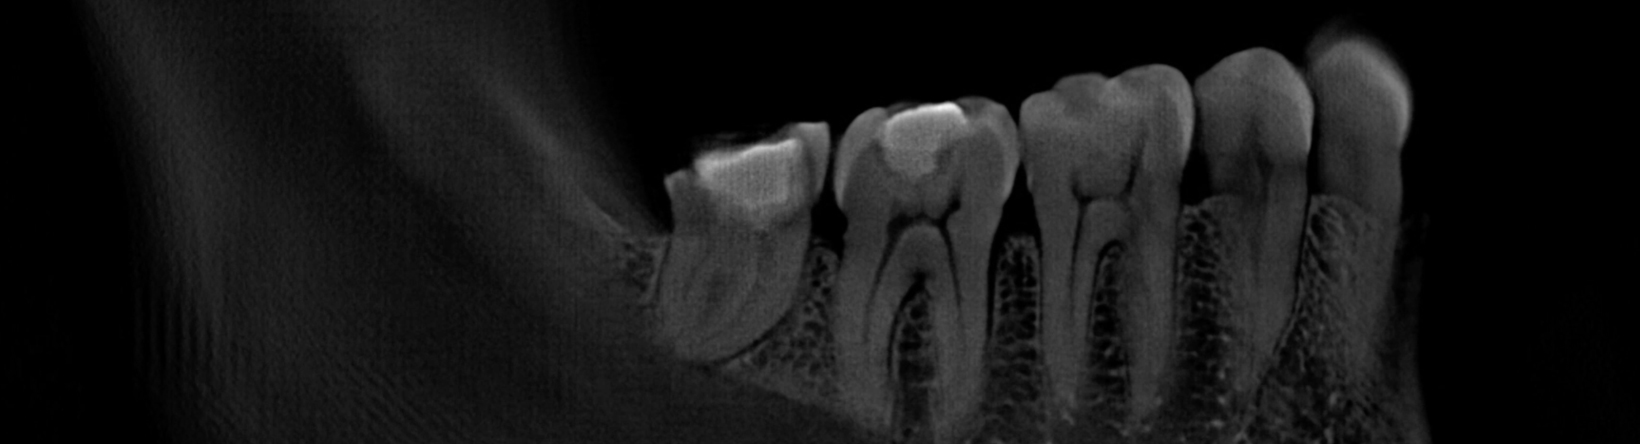 Adaptix-Dentistry-image2